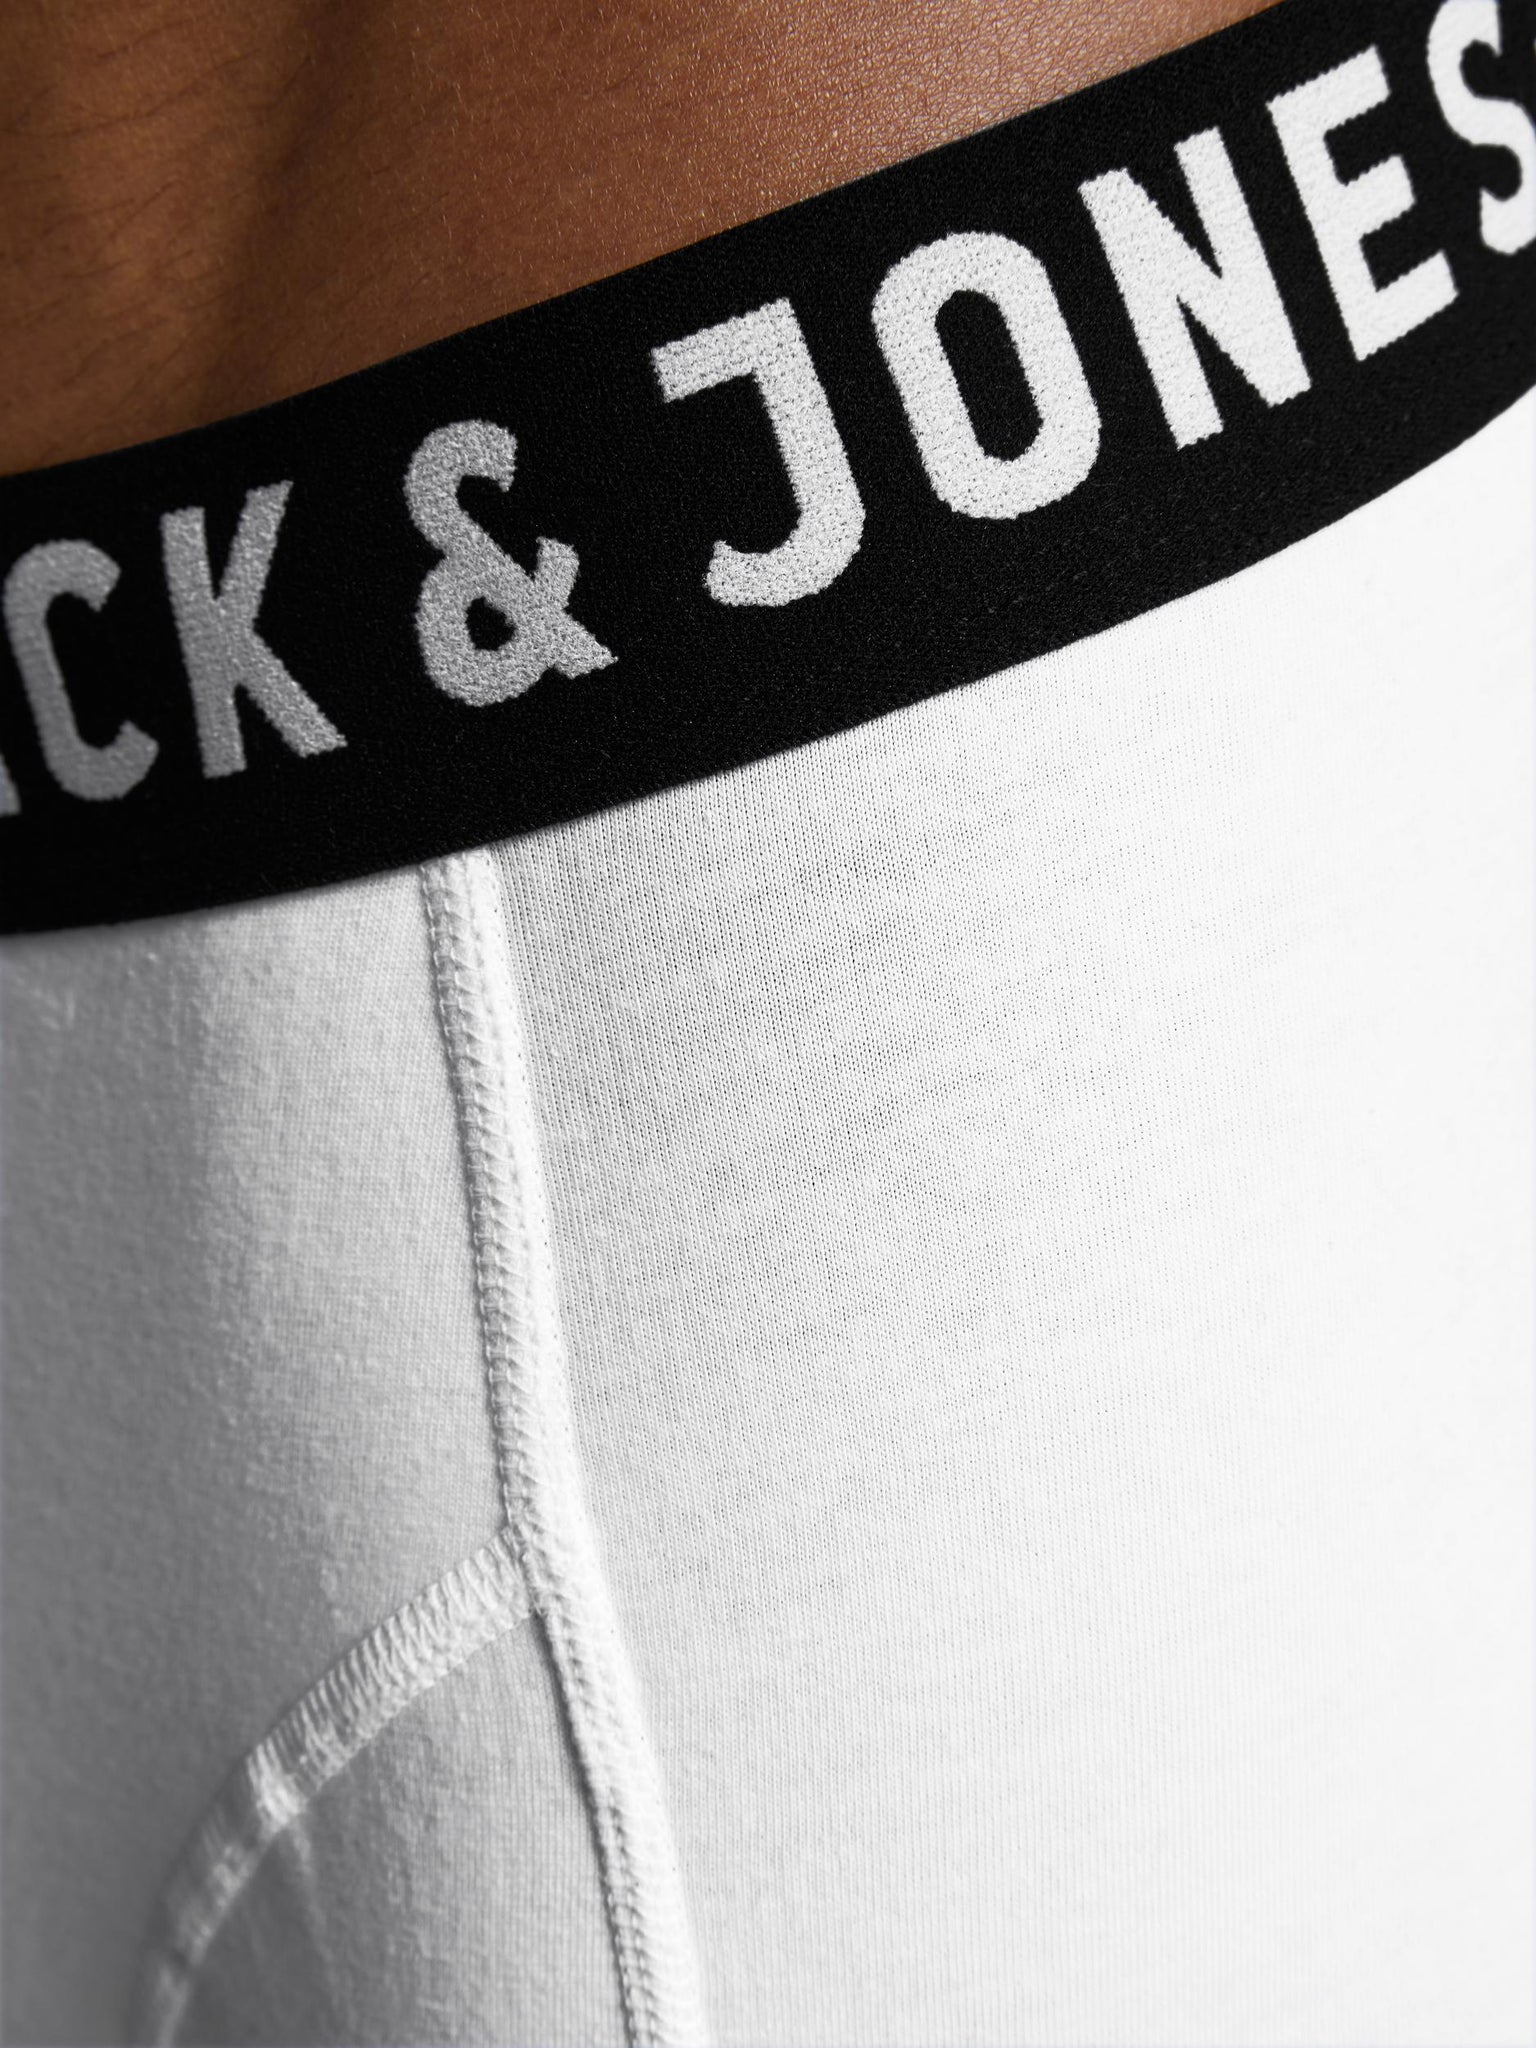 Boxer court Jack & Jones boxer sense blanc